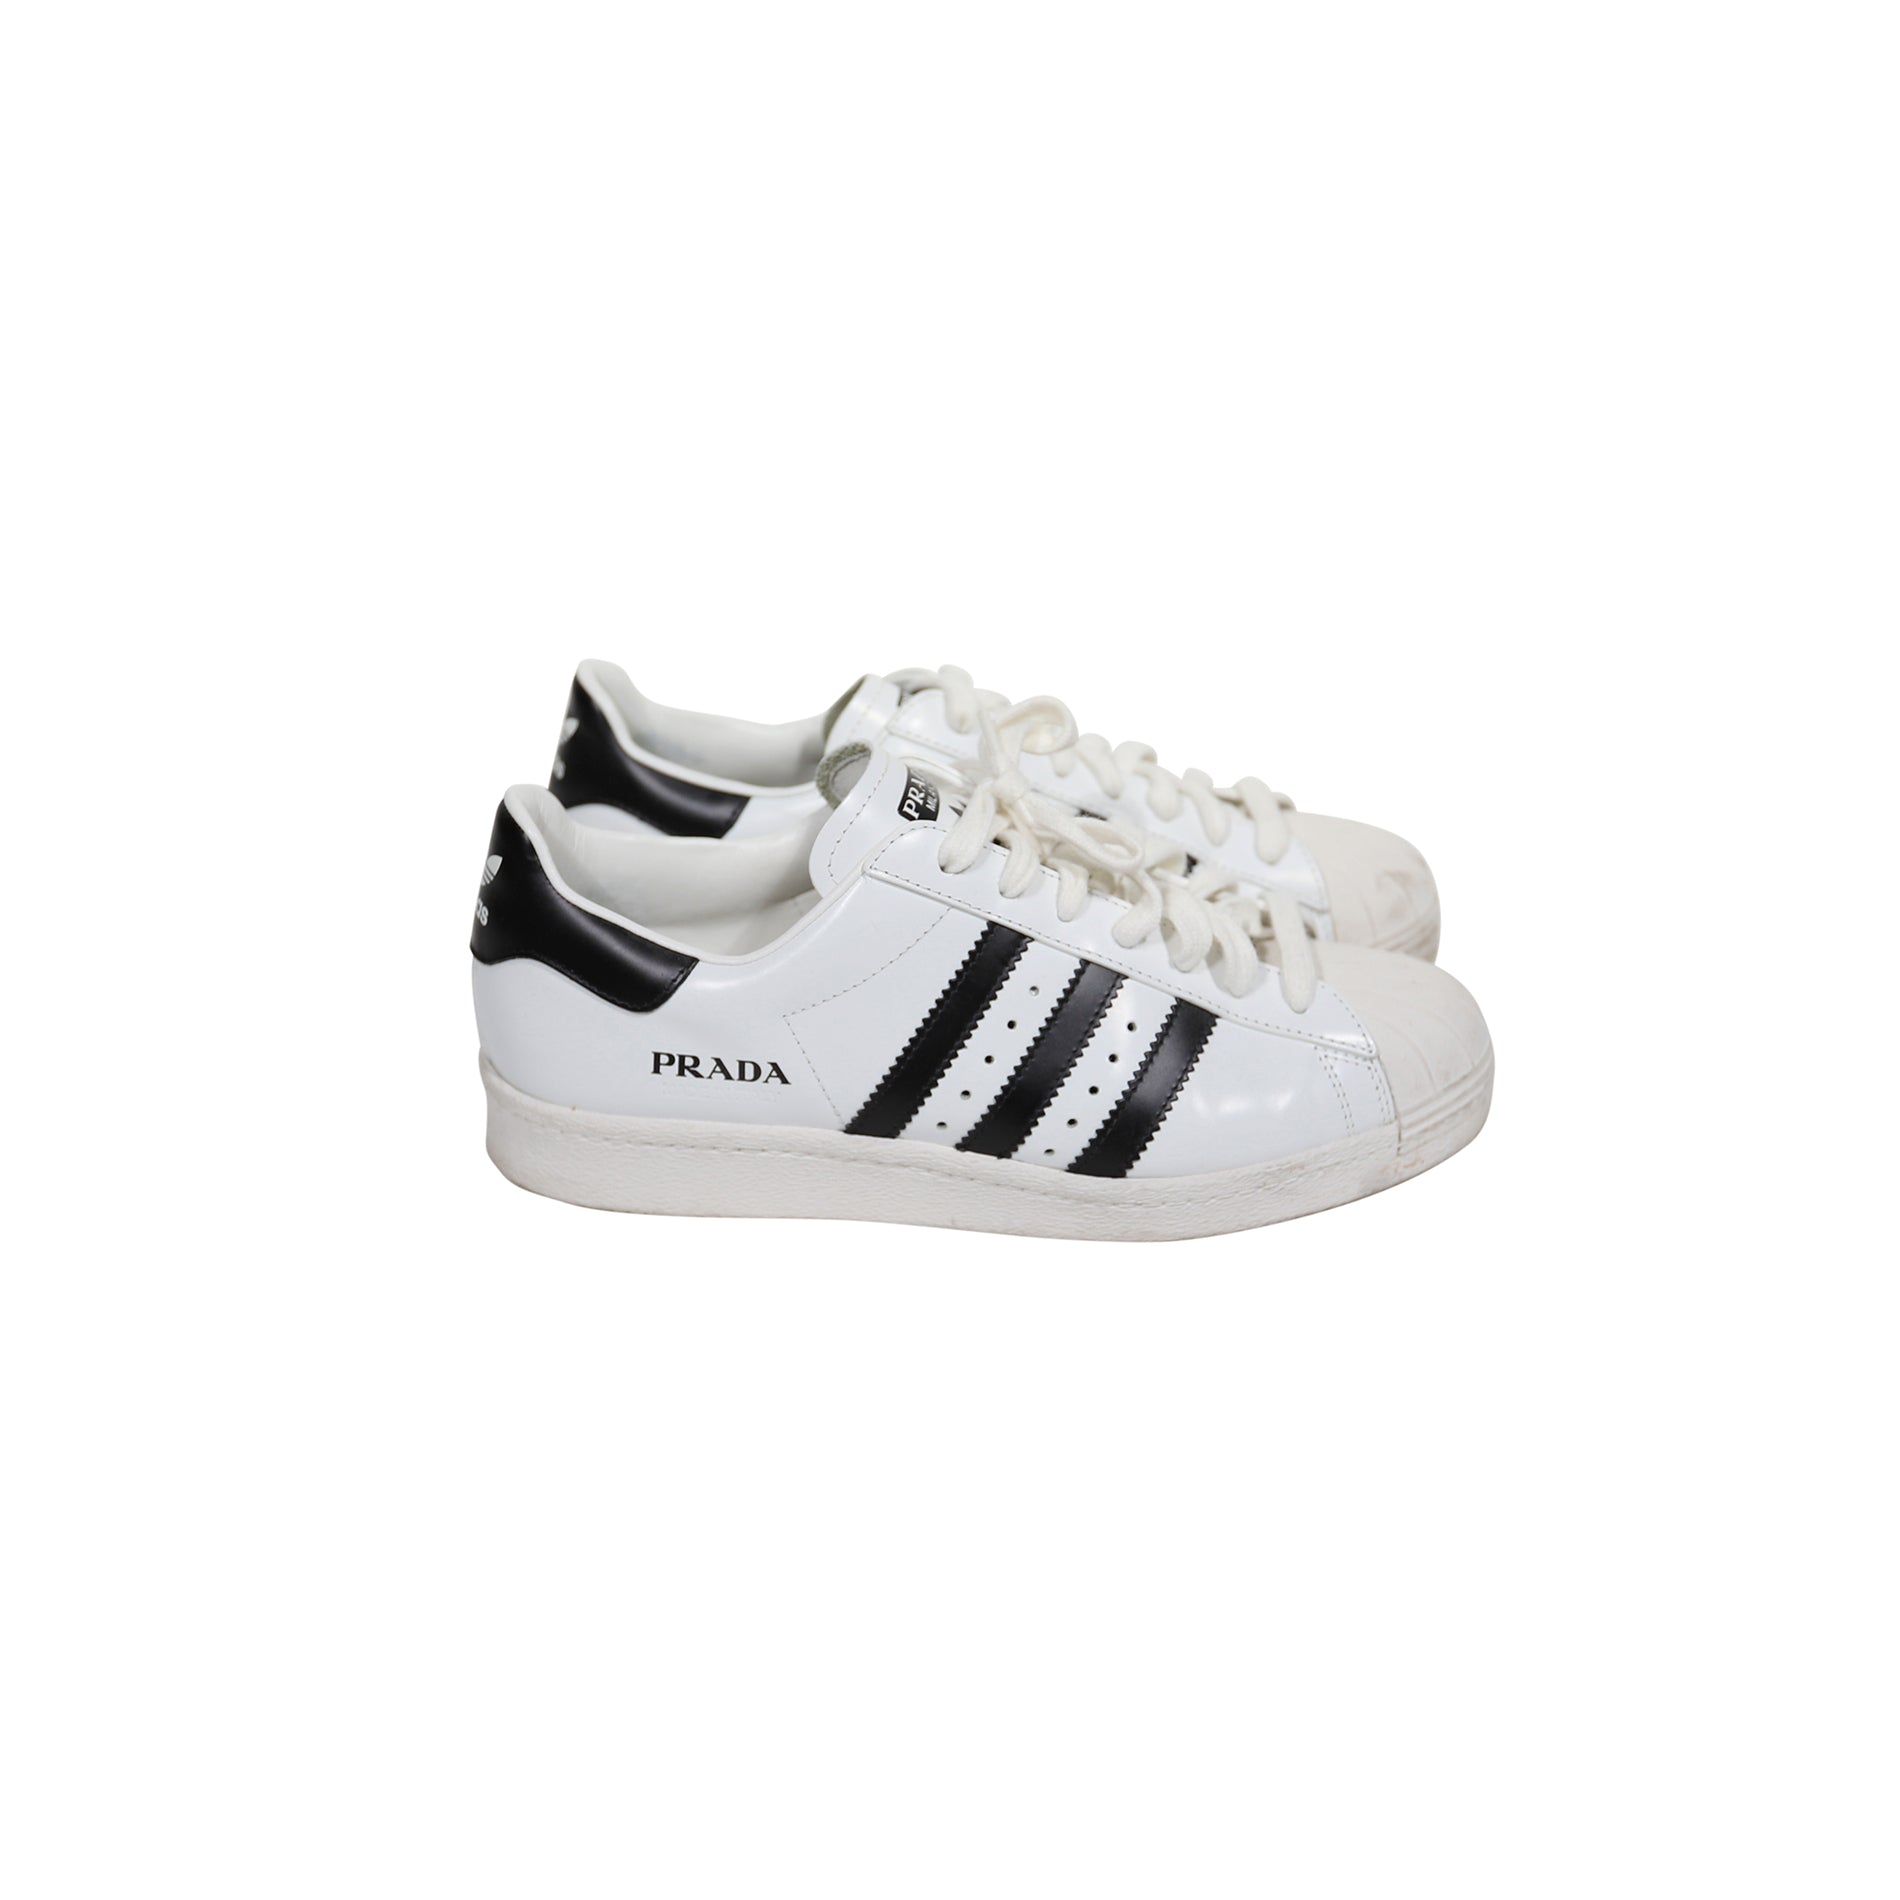 Adidas La Marque aux 3 Bandes White Shell Toe Superstar Sneakers  Men6.5=women 8 | eBay